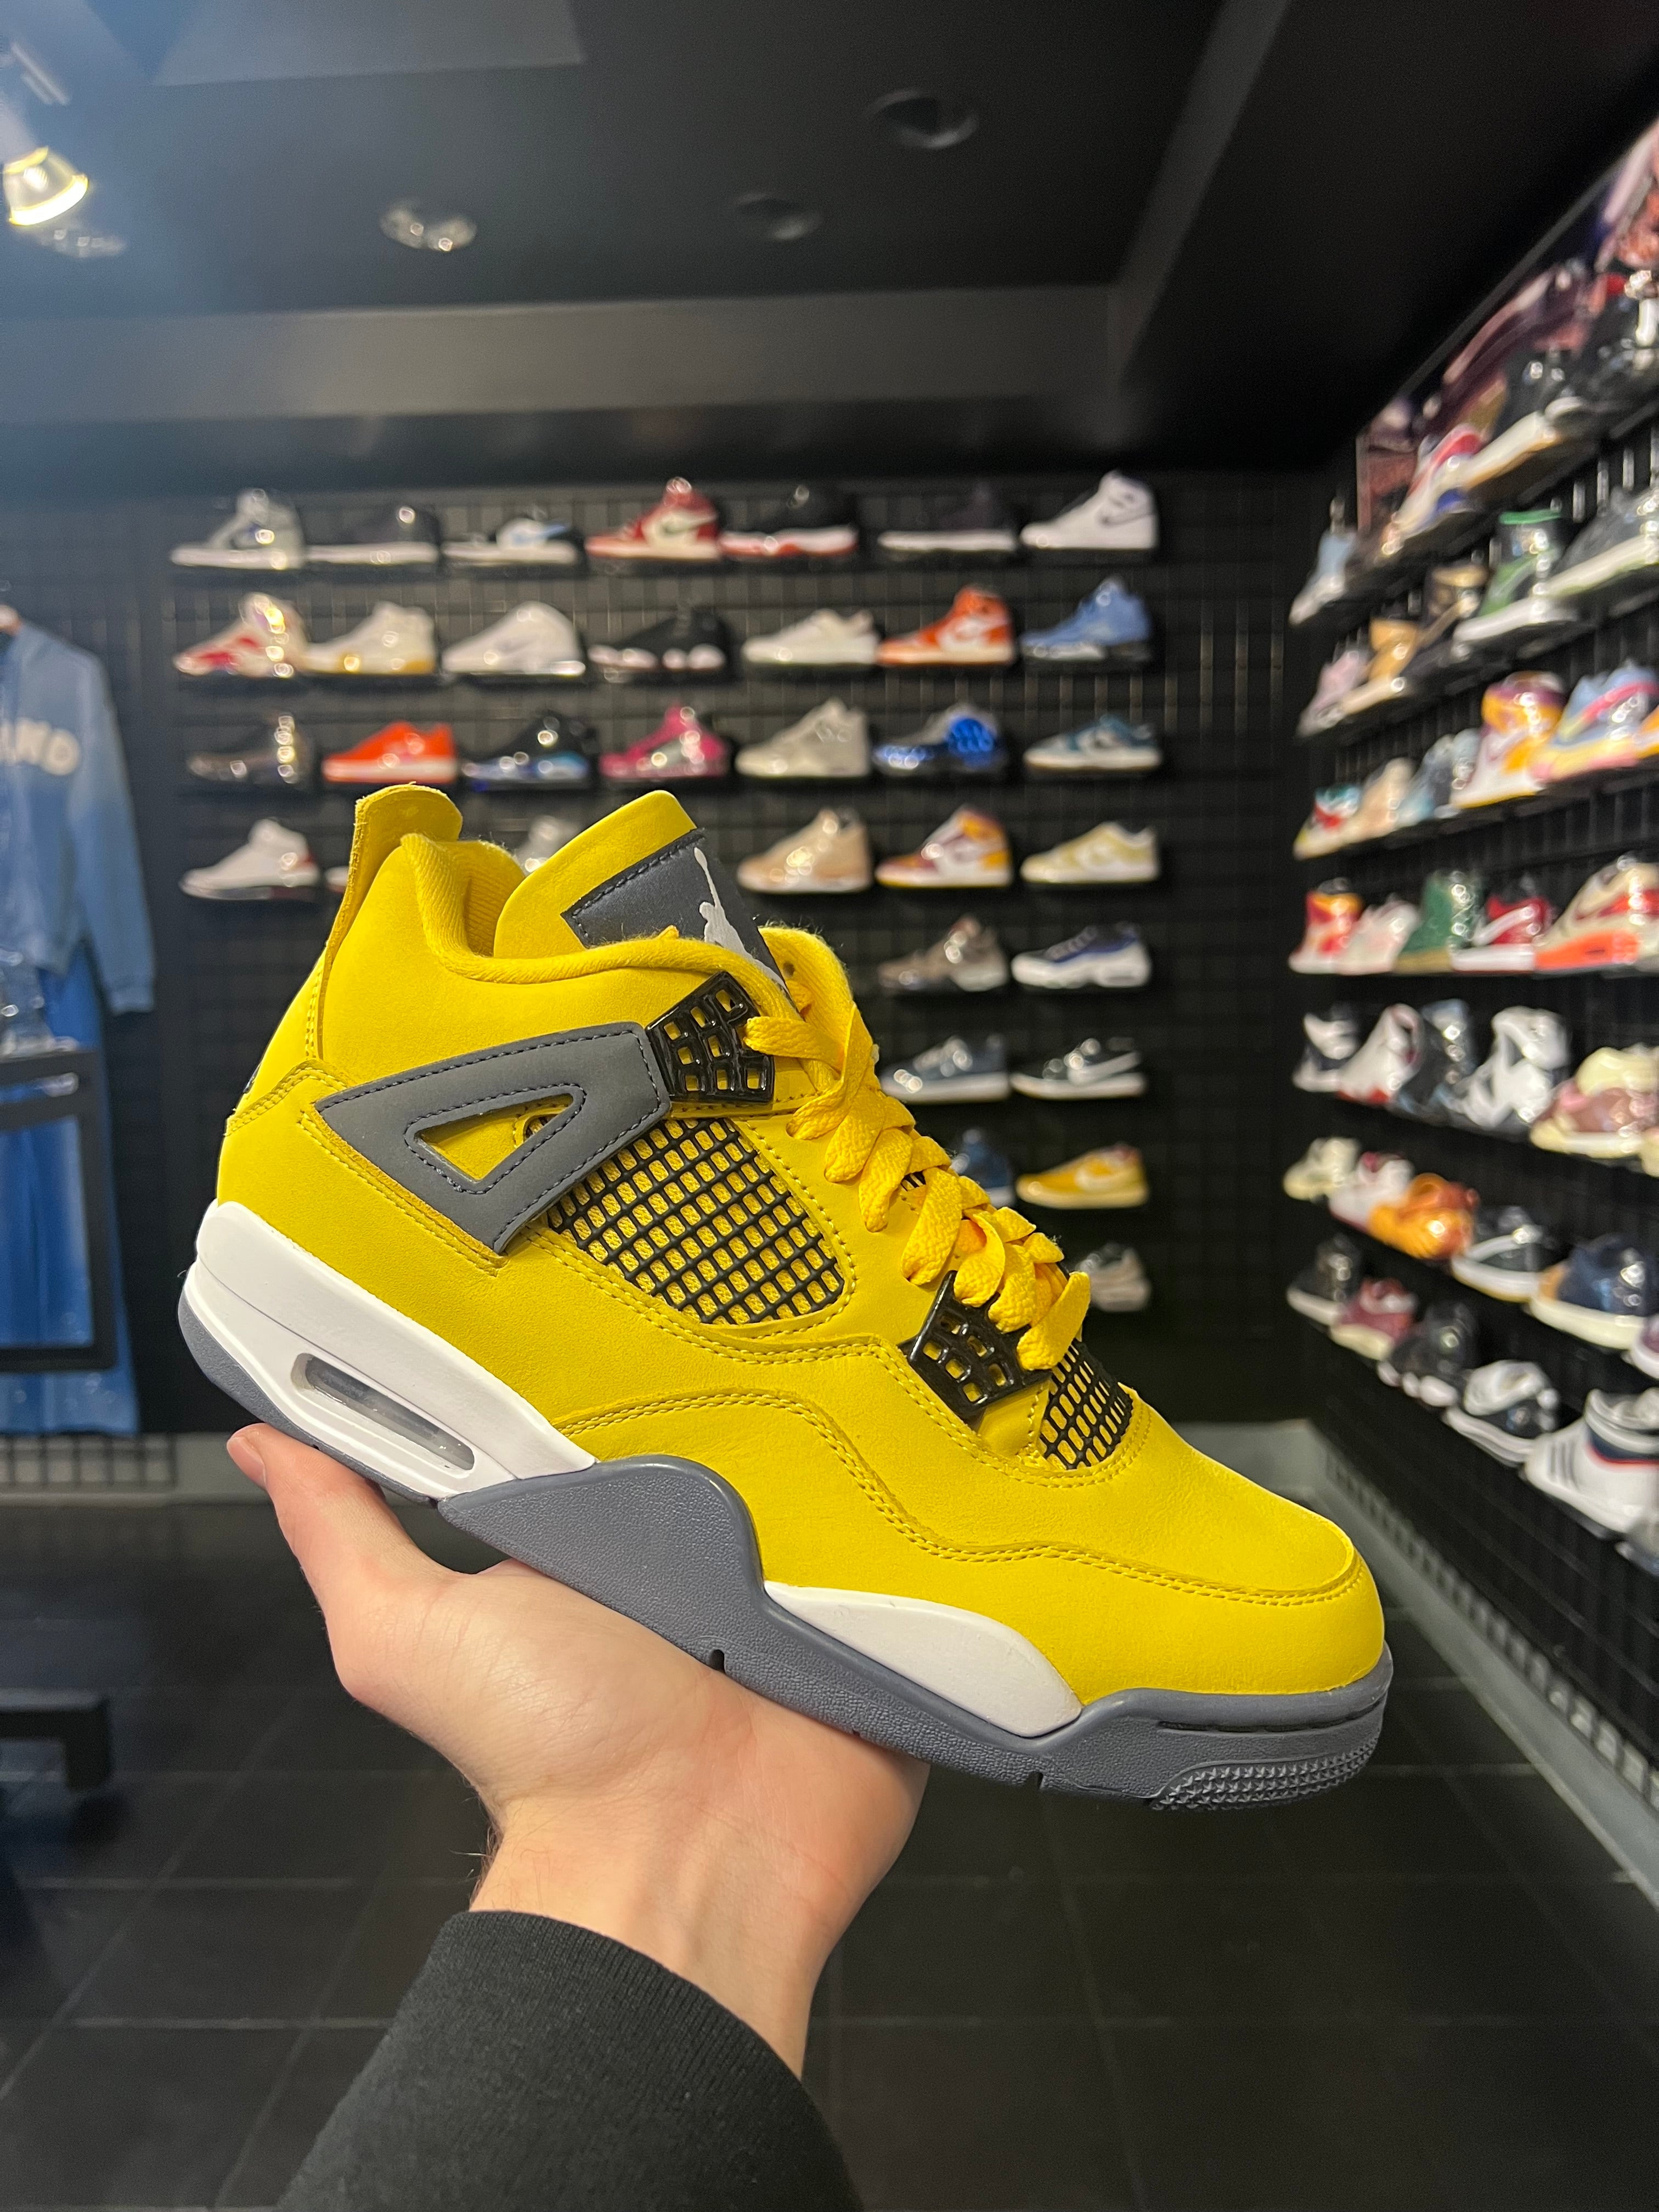 Men’s Air Jordan 4 Retro Lightning shoe new